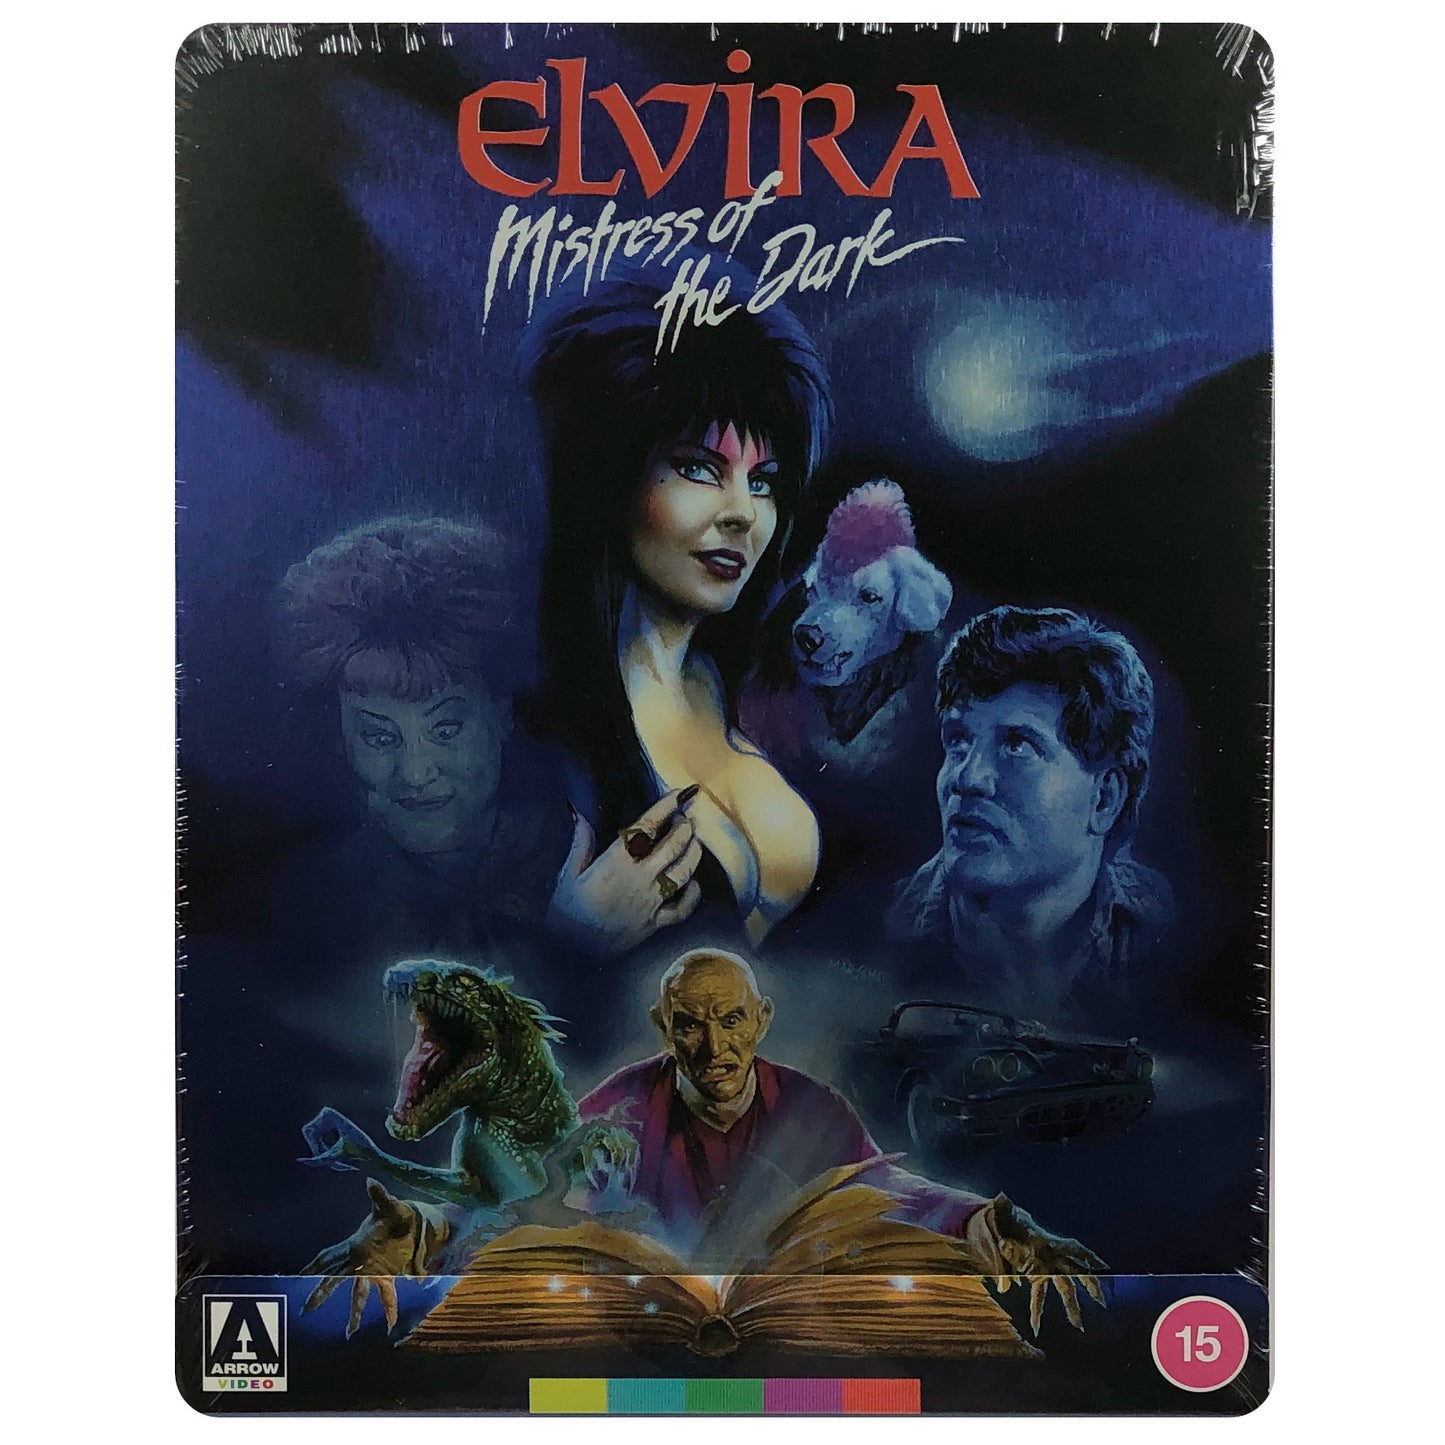 Elvira: Mistress of the Dark Blu-Ray Steelbook